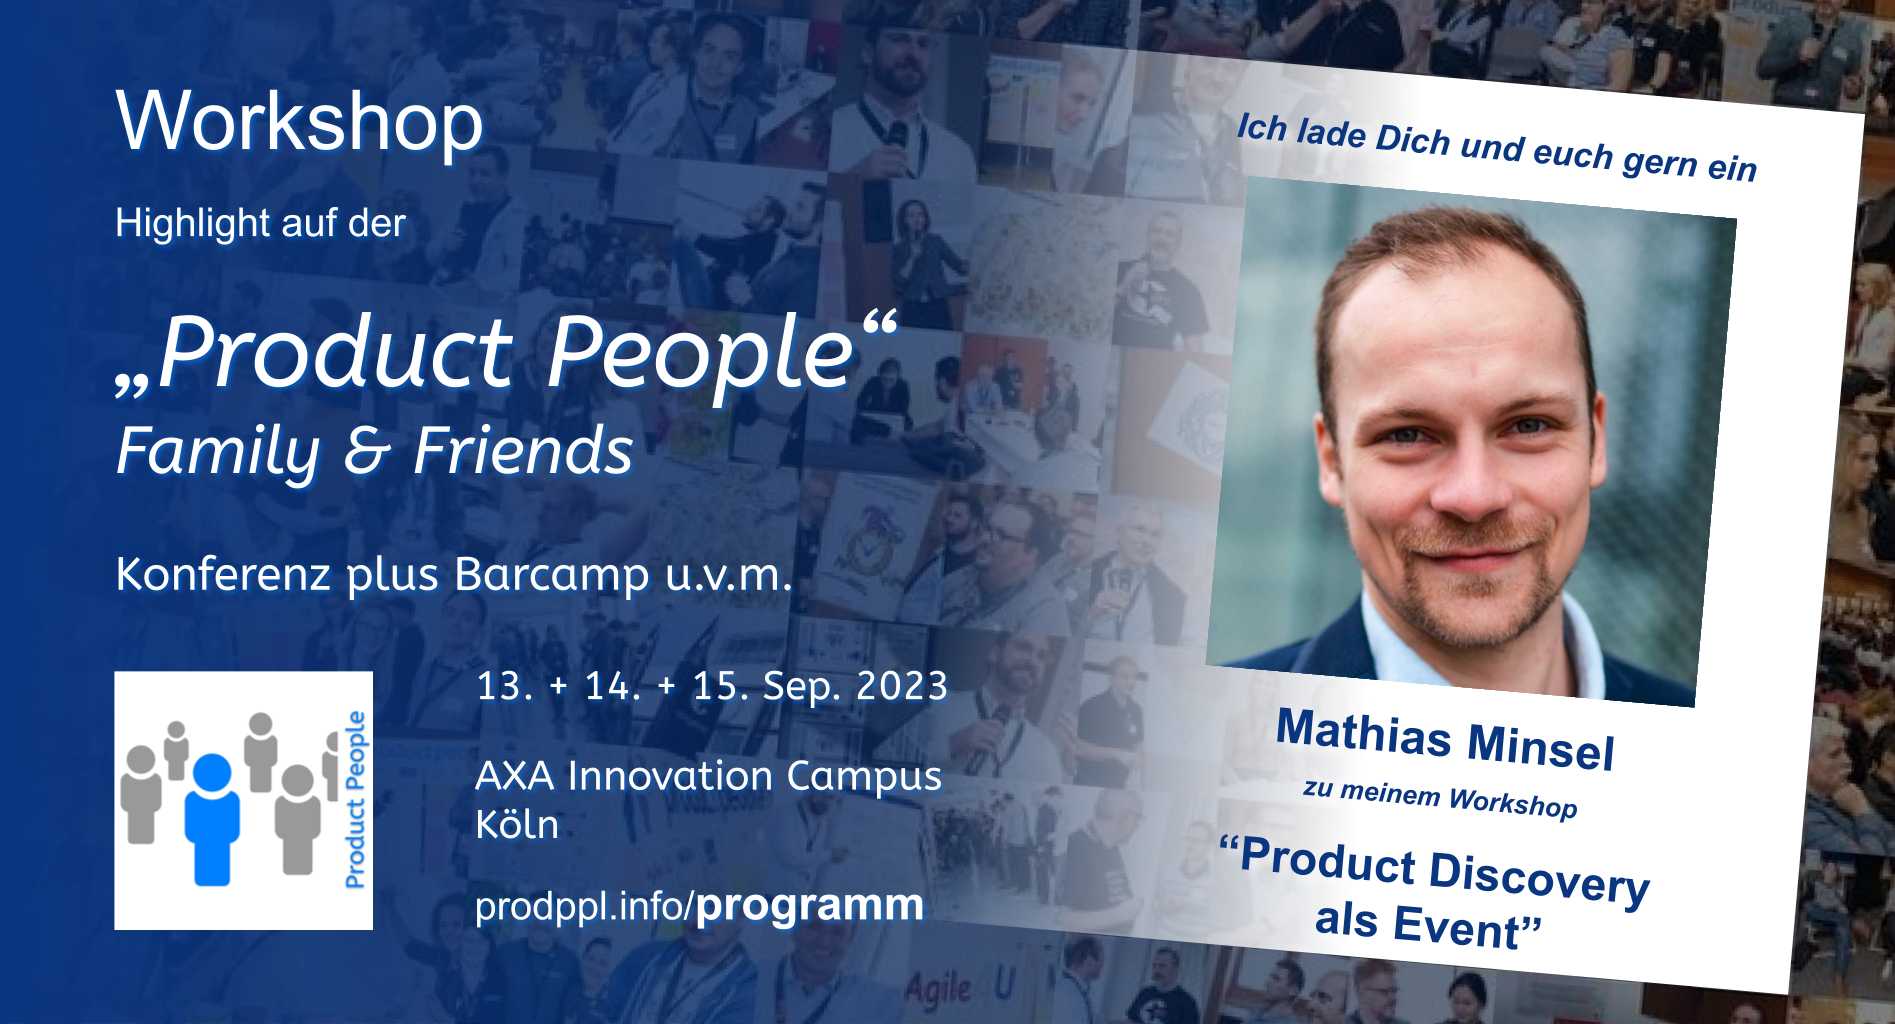 "Product Discovery als Event" - L-Workshop von und mit Mathias Minsel - auf der 'Product People - Family & Friends' - Konferenz plus Barcamp - Köln 2023